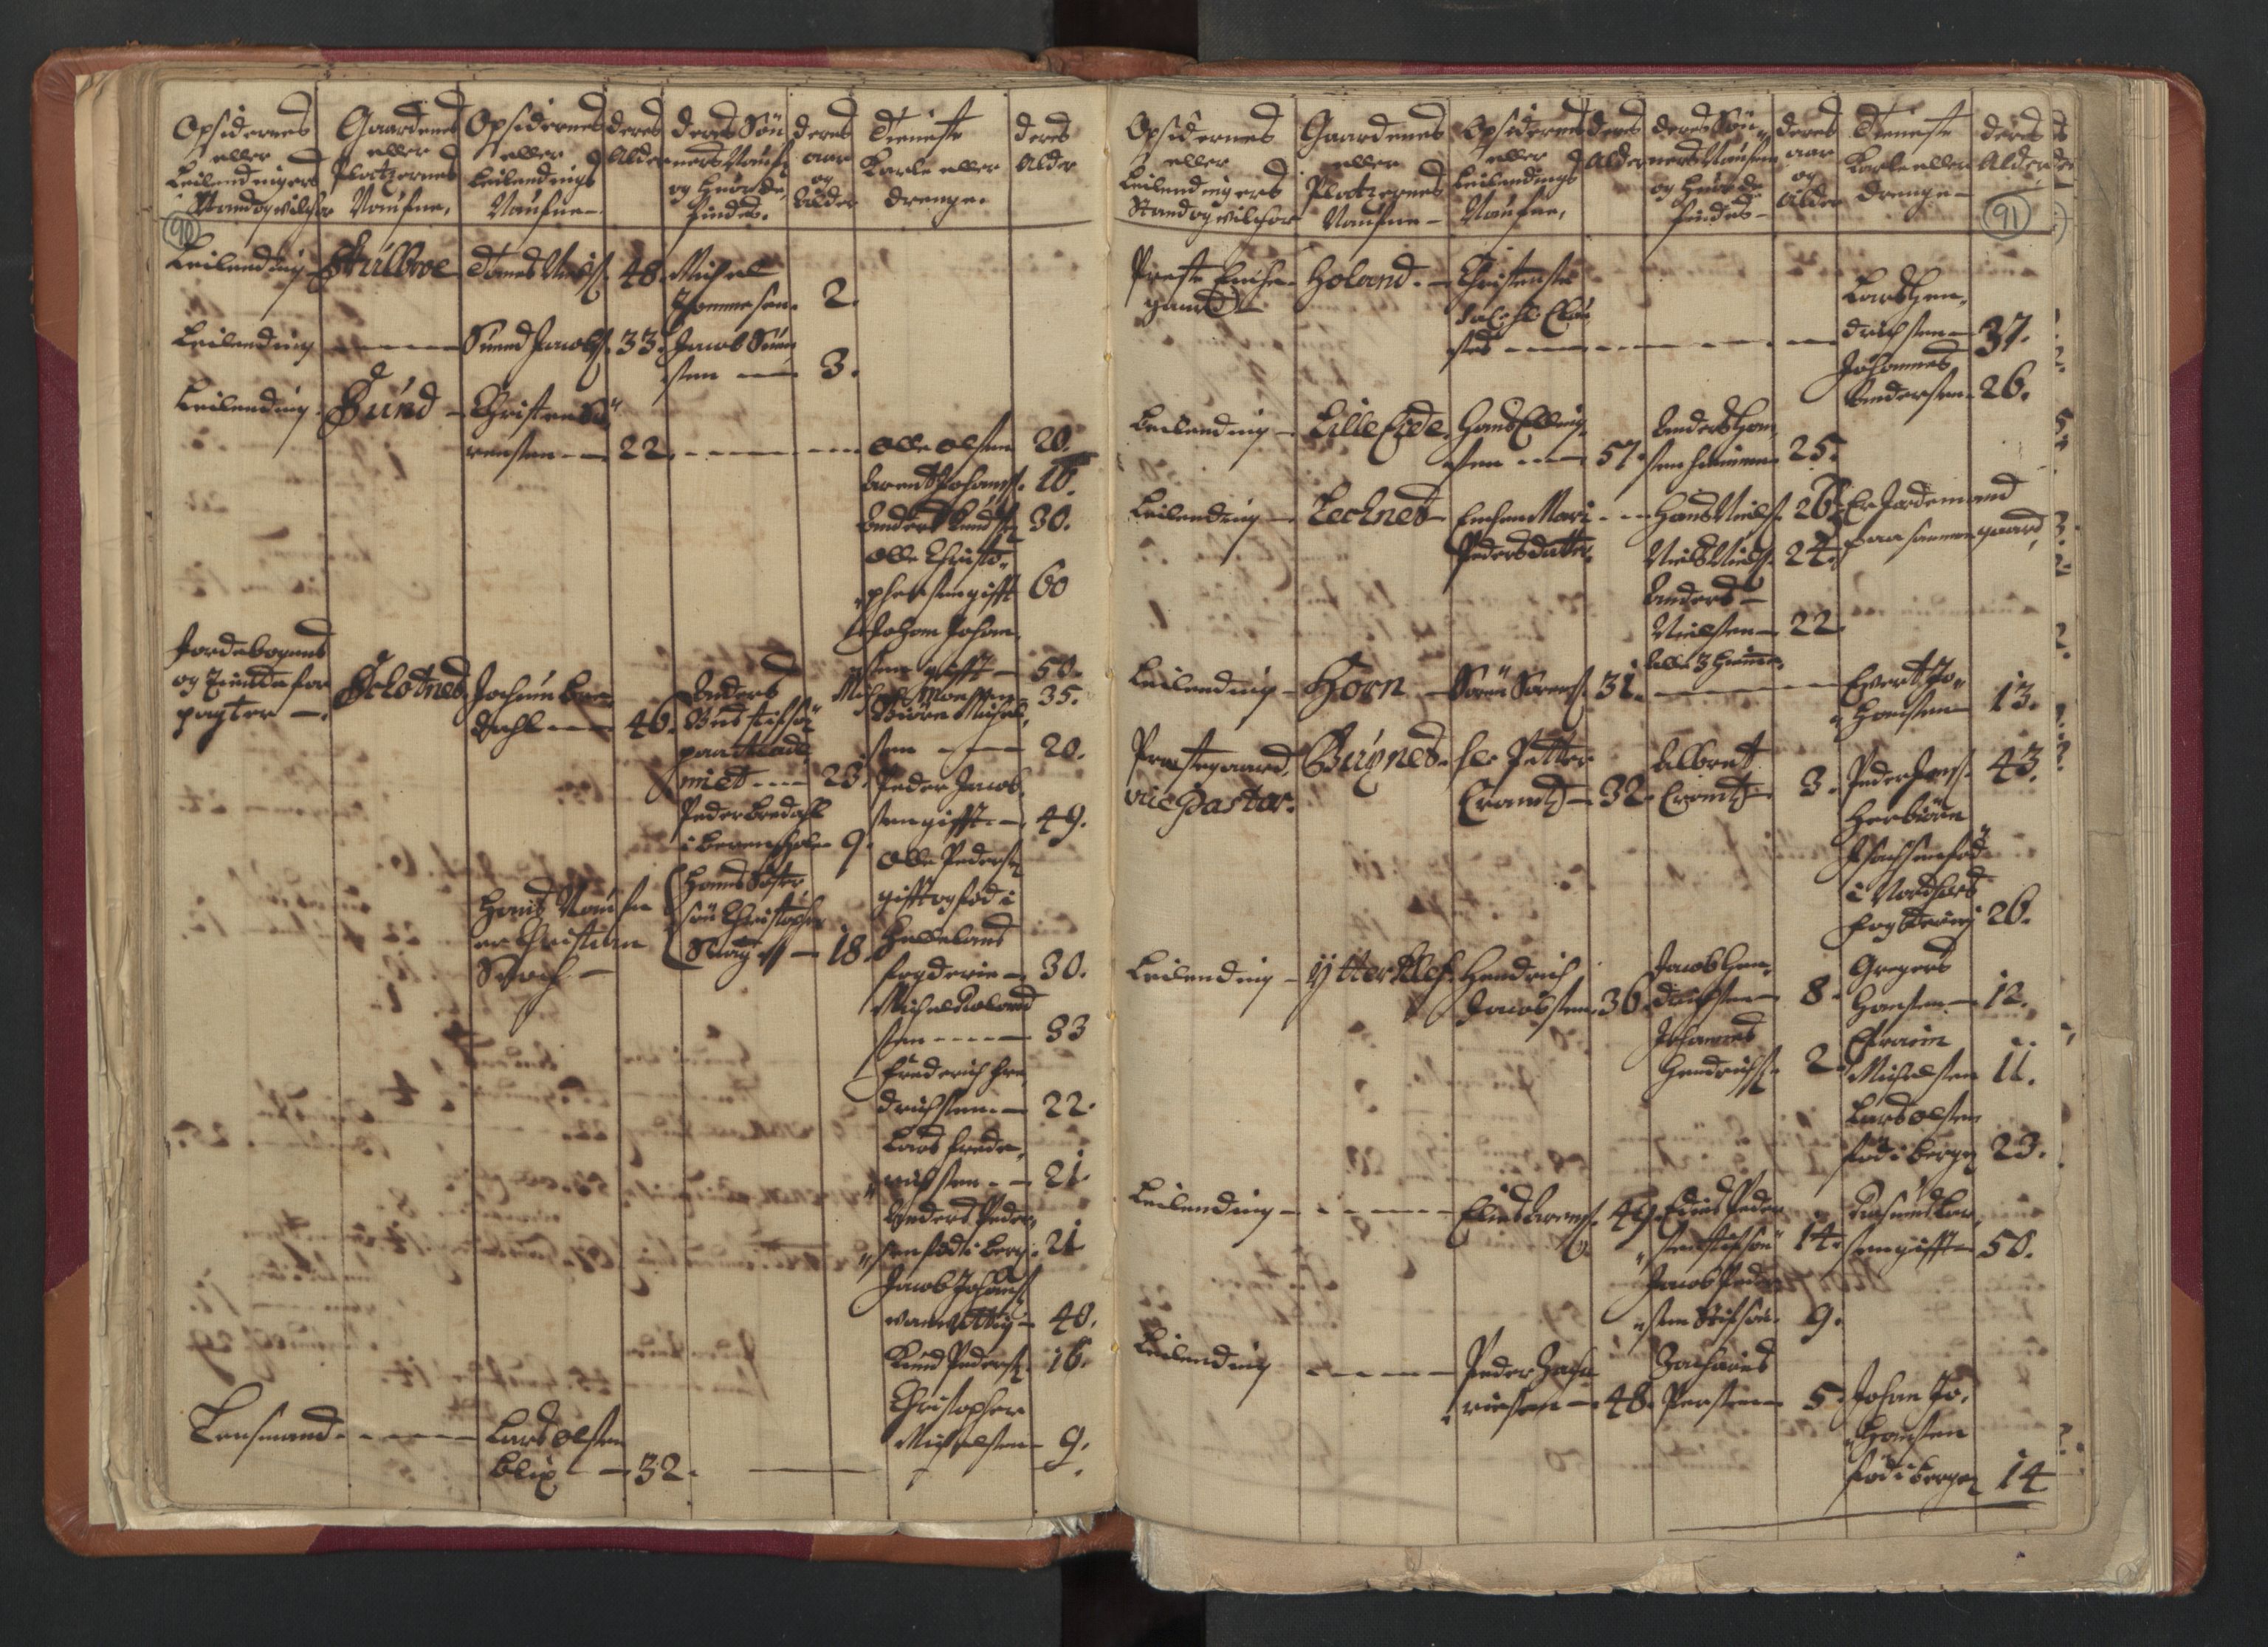 RA, Manntallet 1701, nr. 18: Vesterålen, Andenes og Lofoten fogderi, 1701, s. 90-91